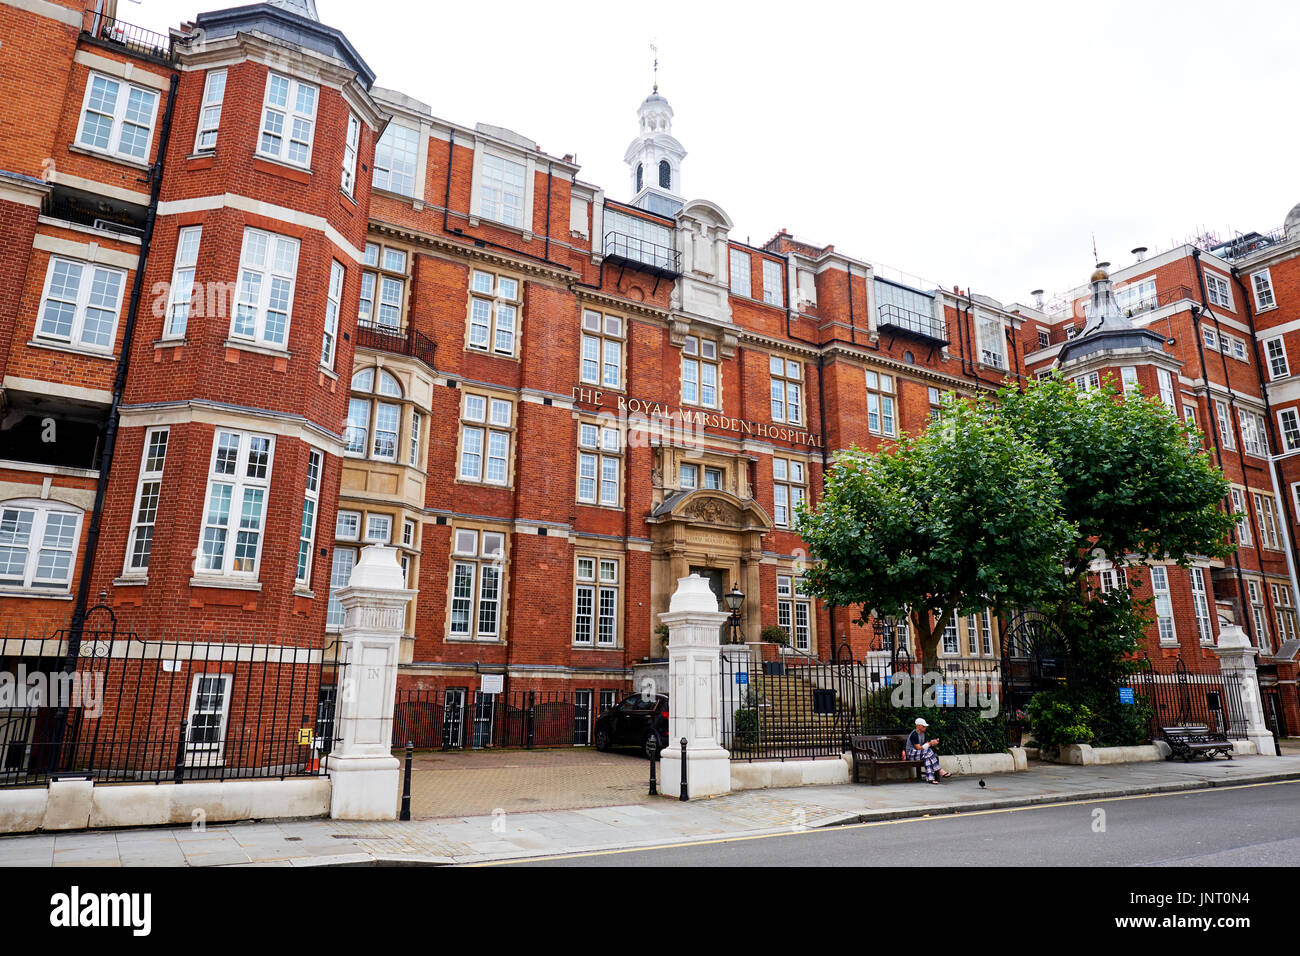 Le Royal Marsden Hospital, Fulham Road, Chelsea, London, UK Banque D'Images